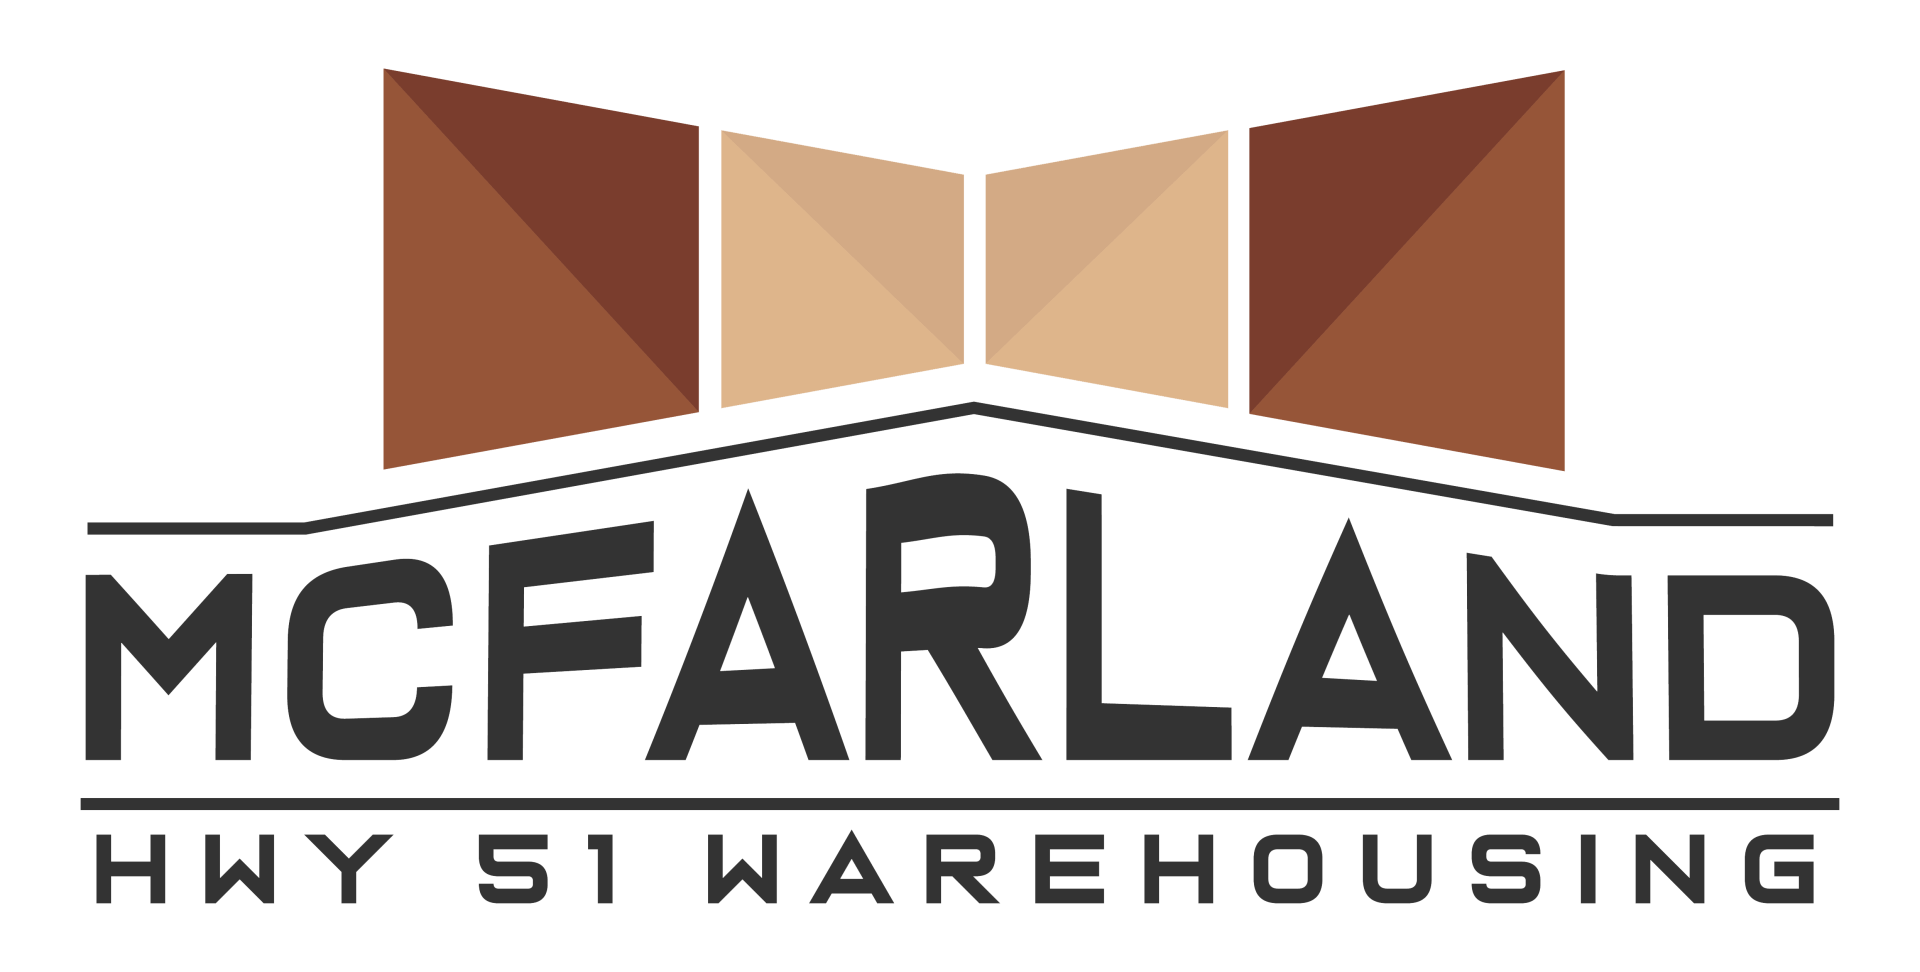 McFarland Hwy 51 Warehousing